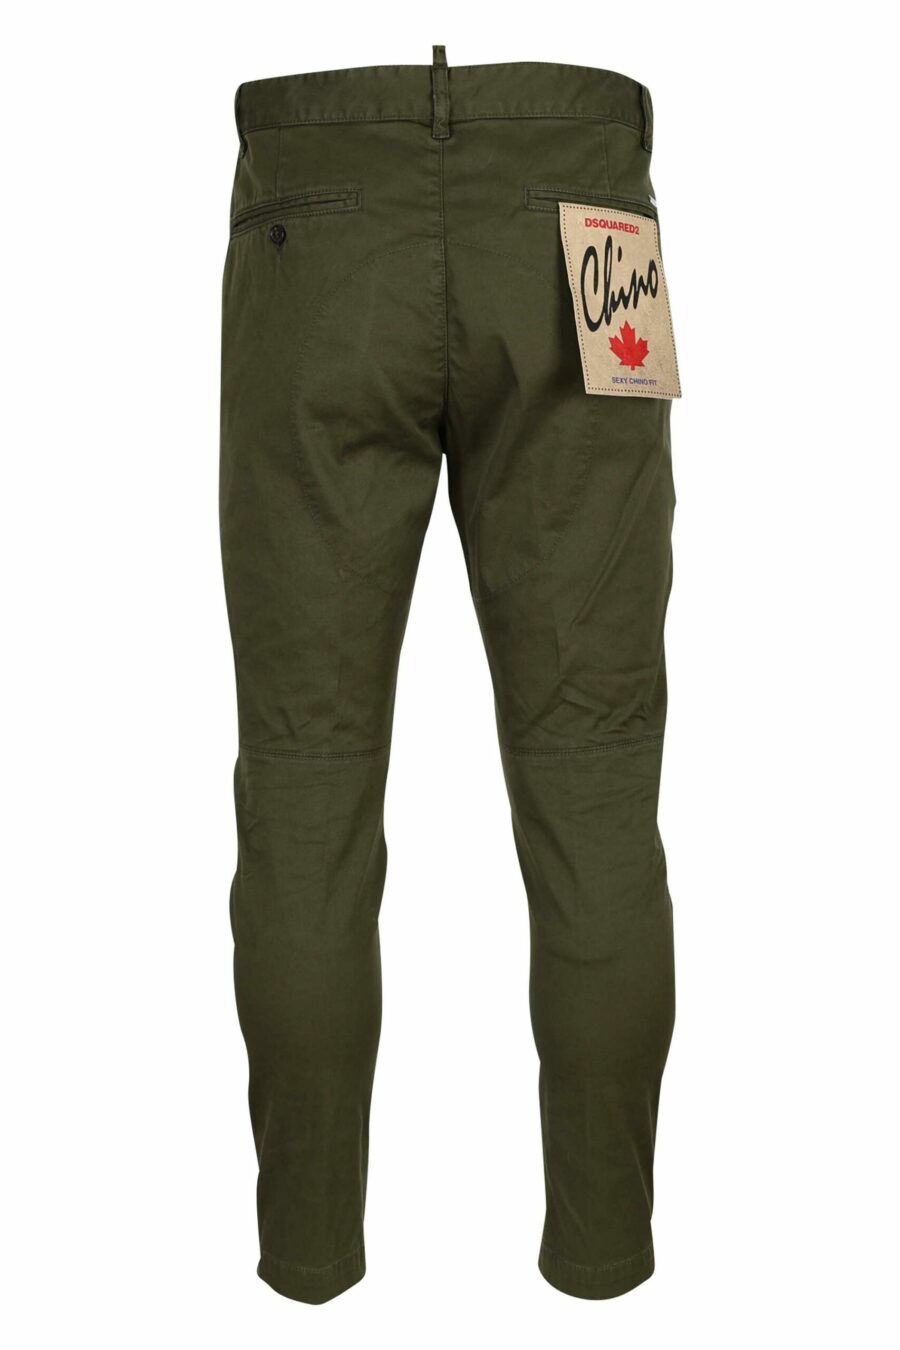 Pantalon "sexy chino" vert militaire - 8054148321741 2 échelles